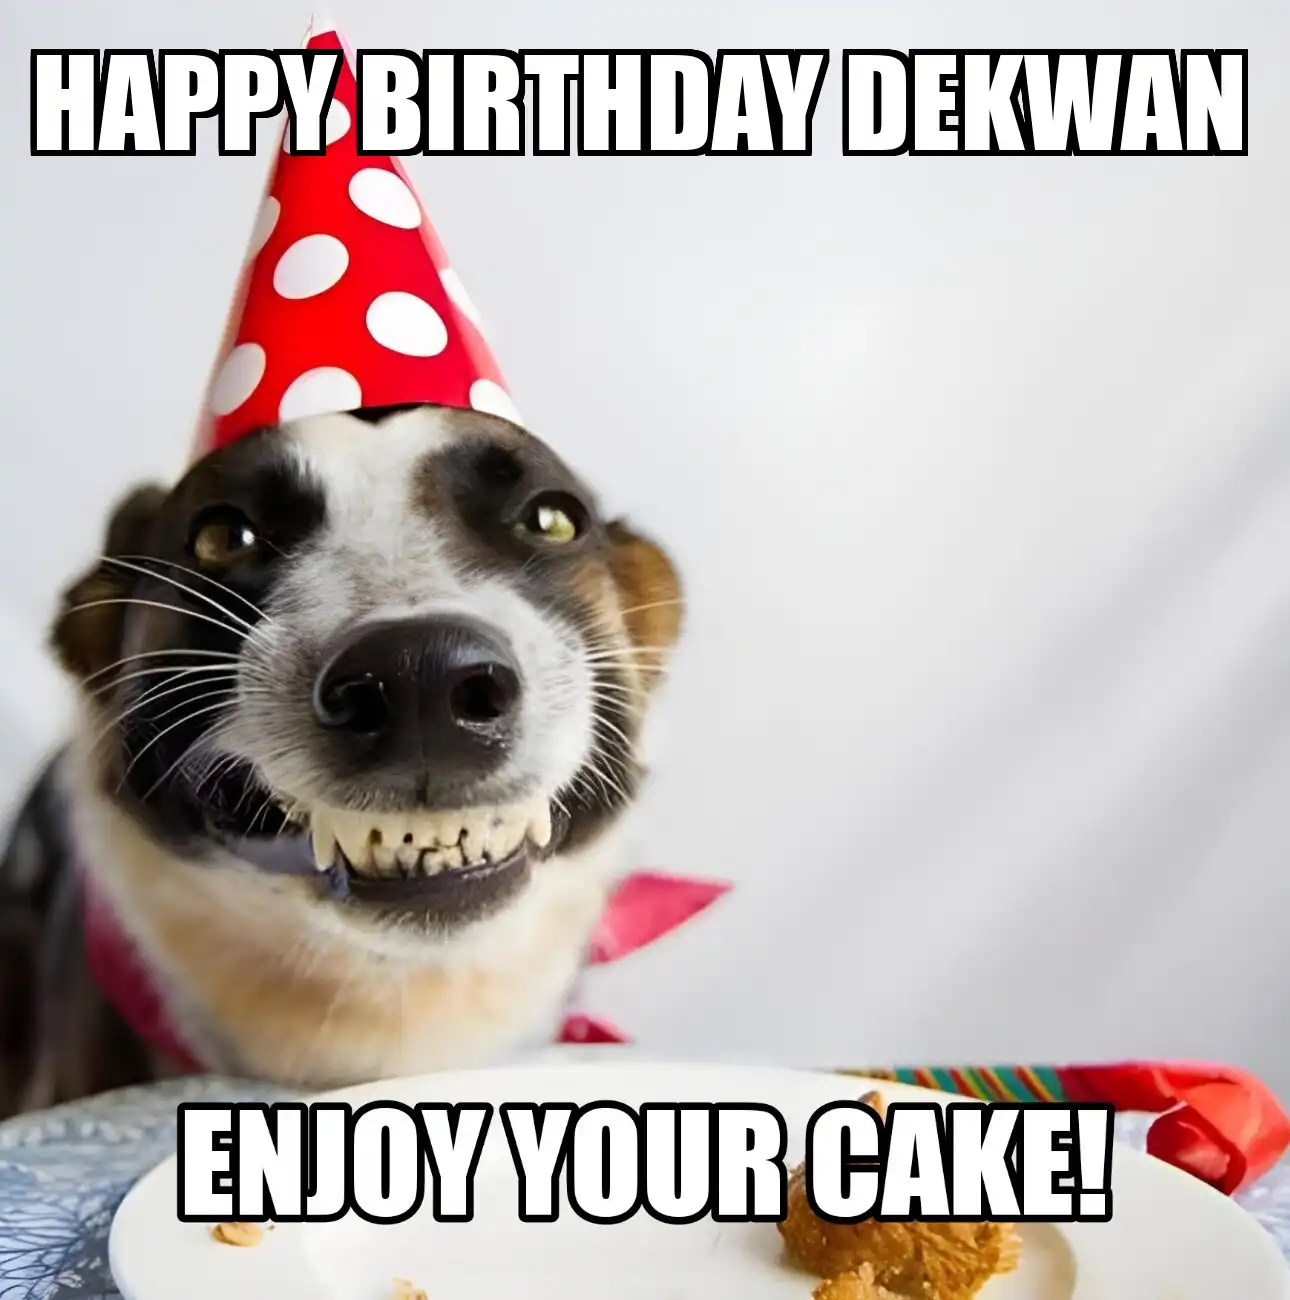 Happy Birthday Dekwan Enjoy Your Cake Dog Meme